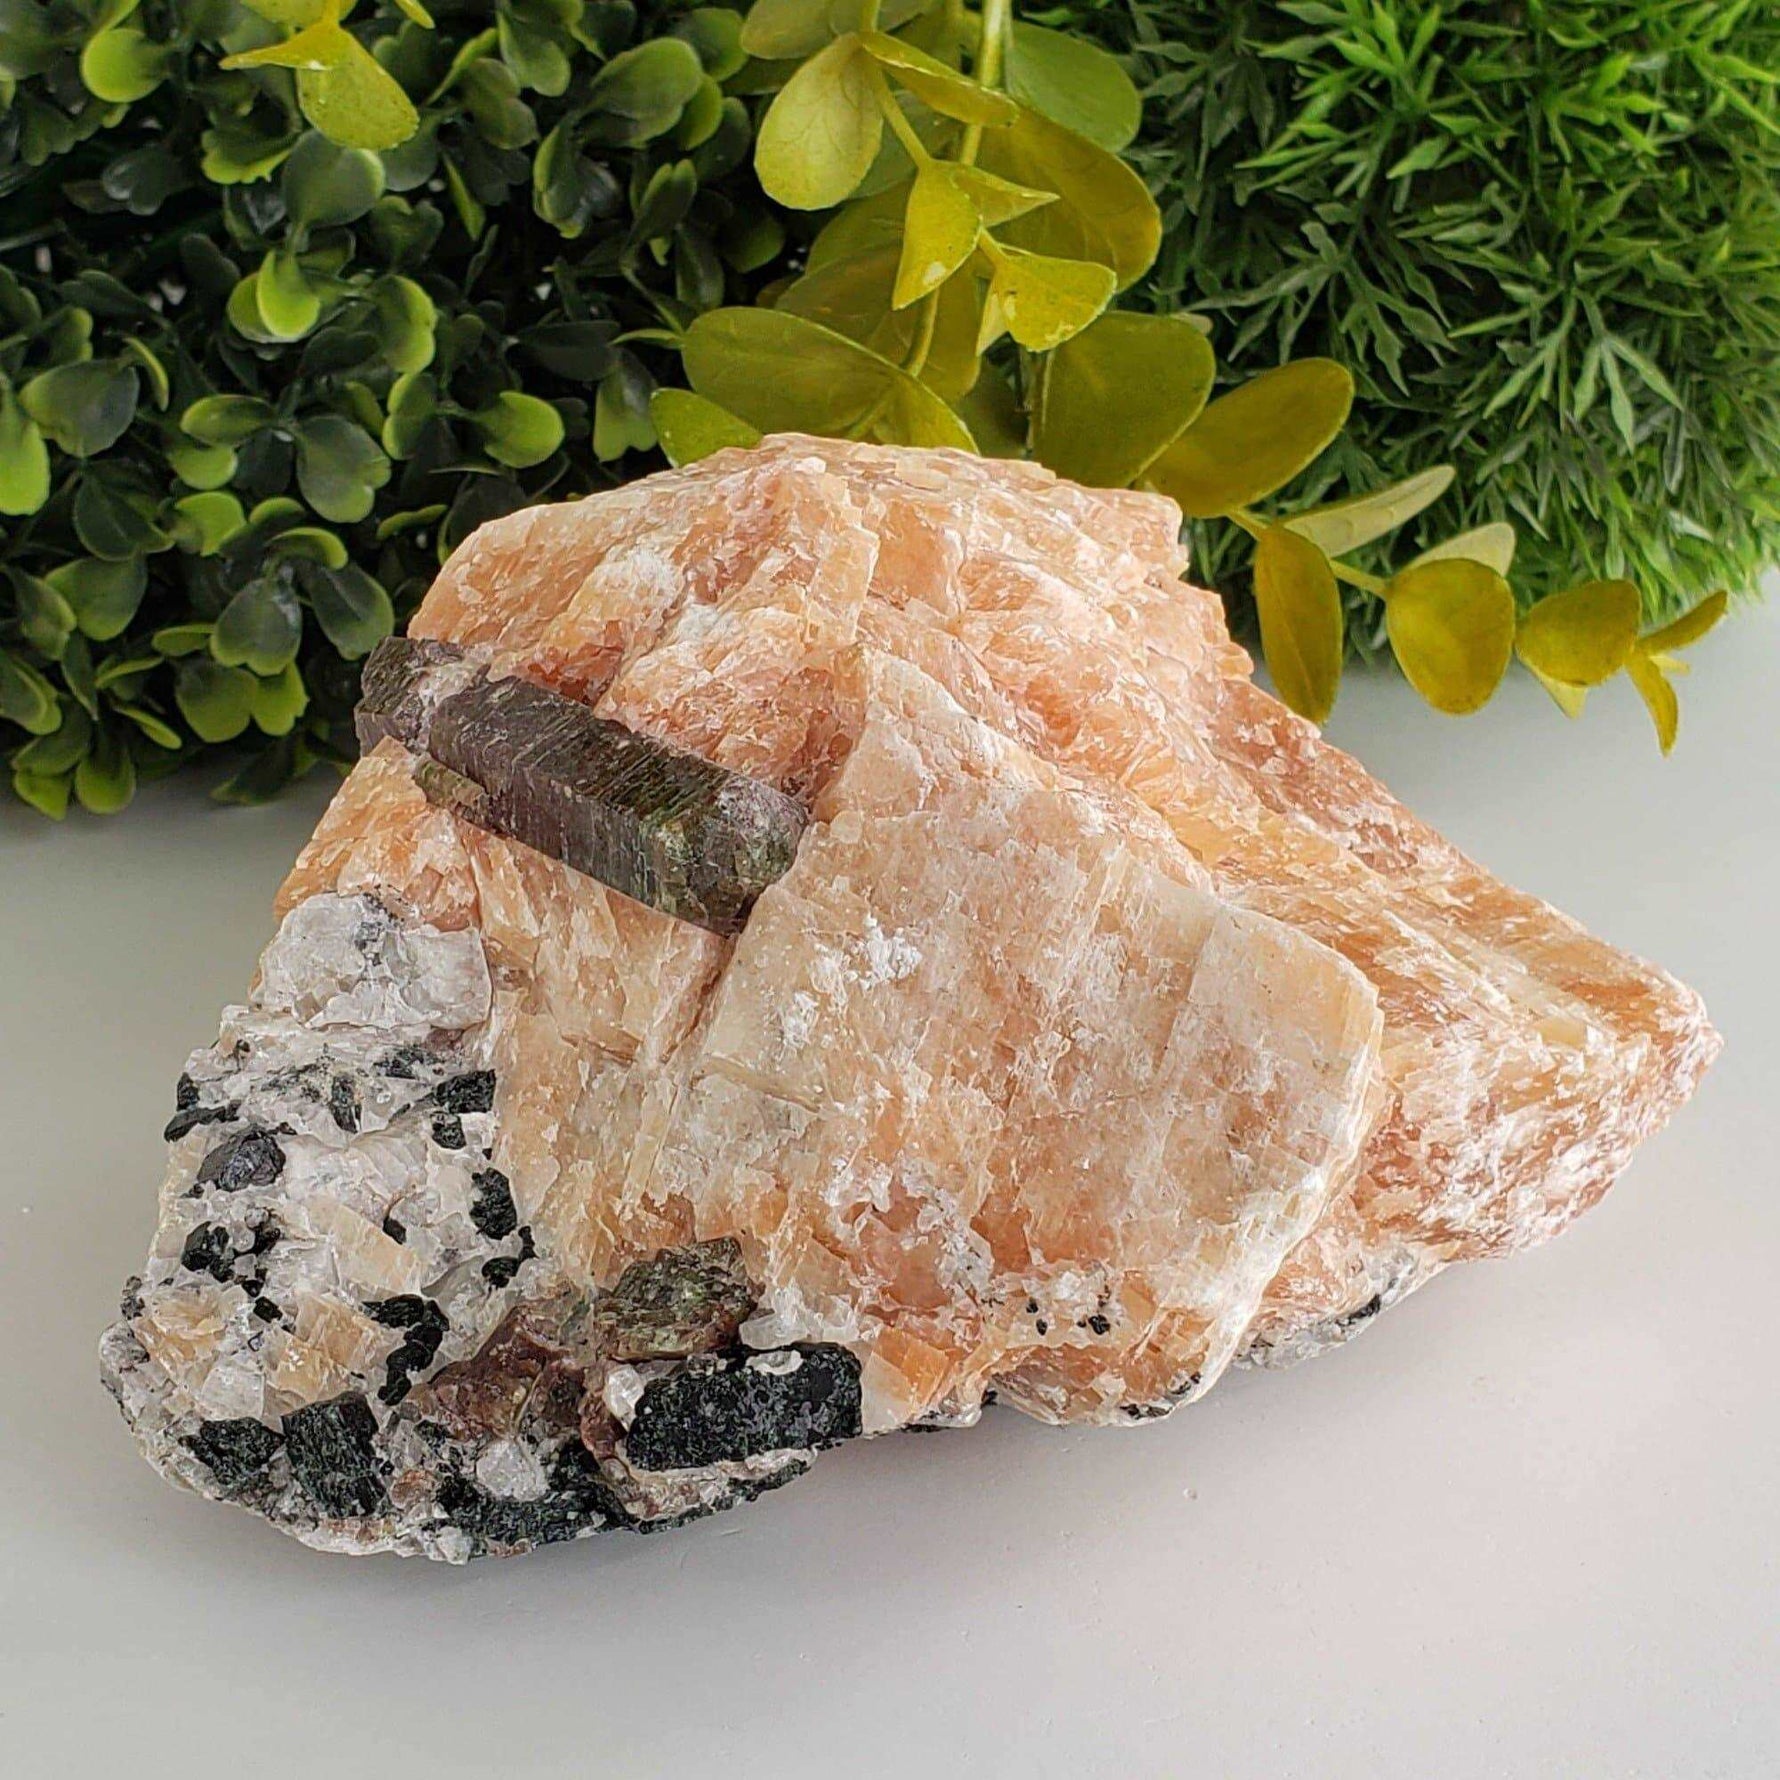 Fluorapatite Crystal on Calcite Matrix | 1.32 Kg | Otter Lake, Quebec